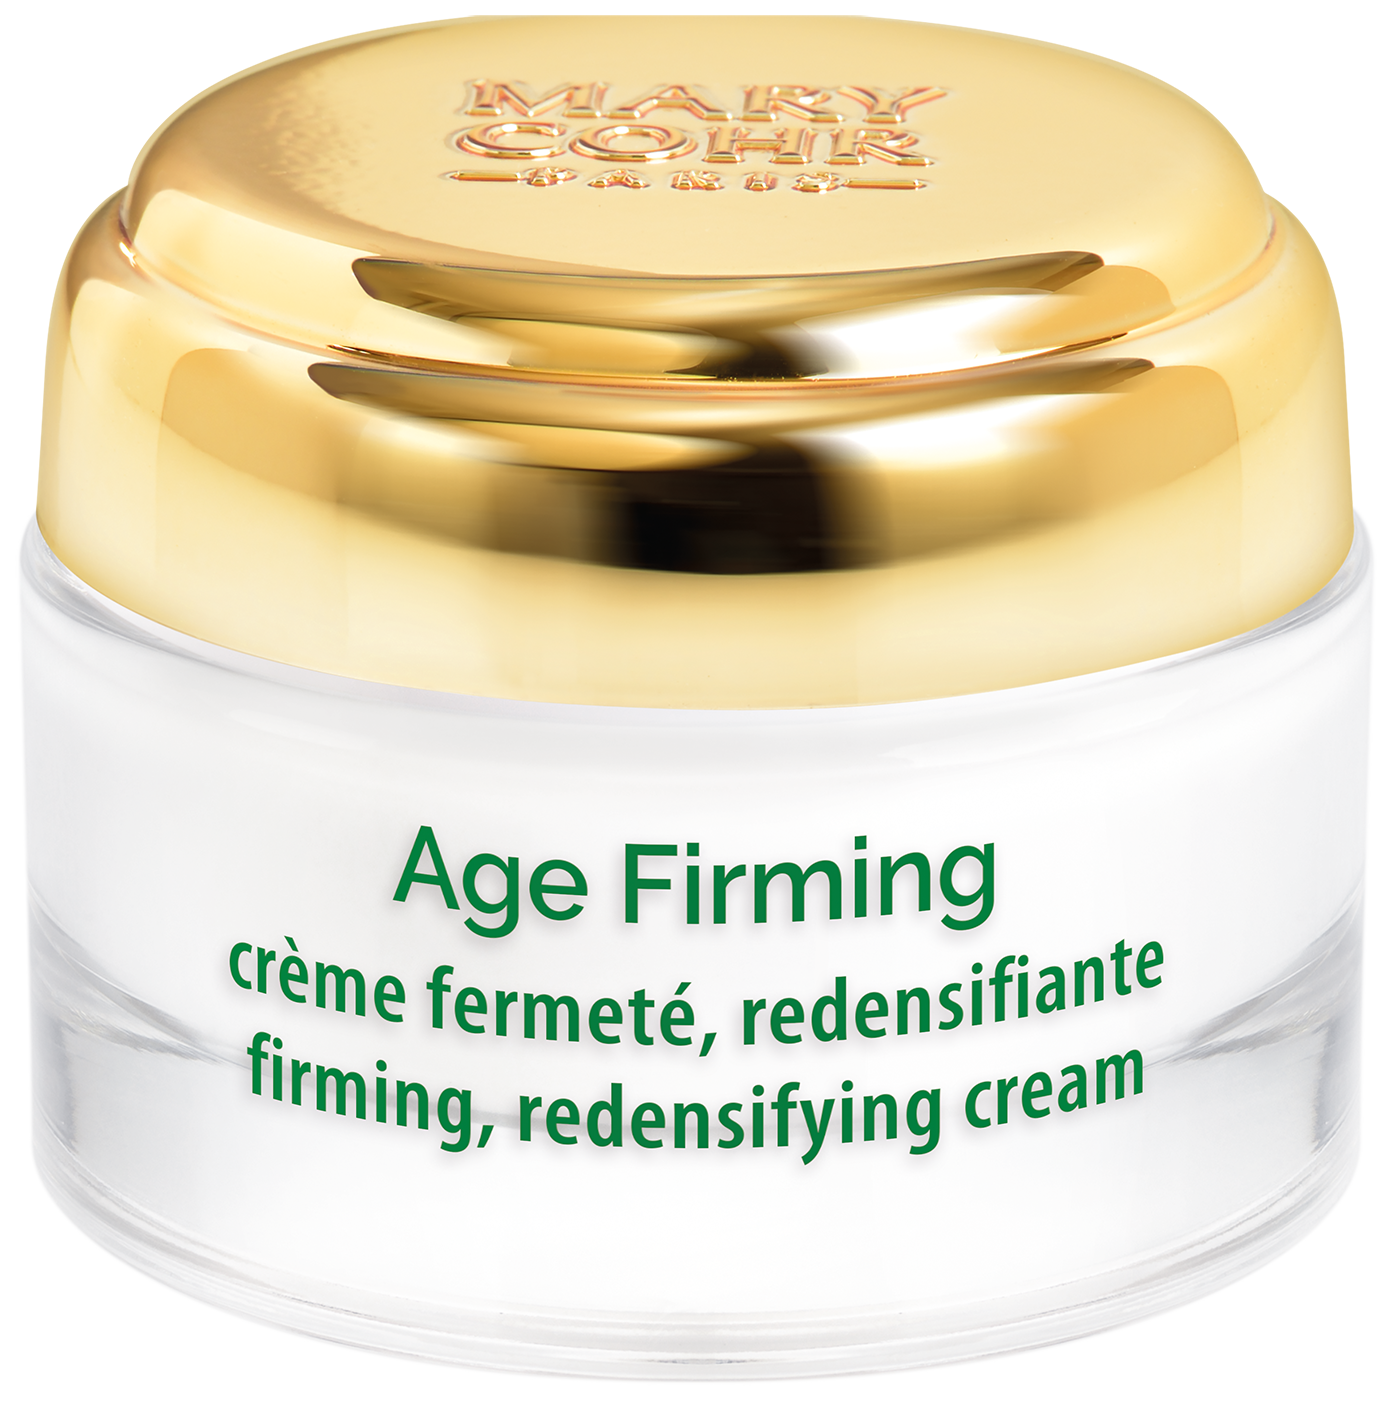 Age firming cream